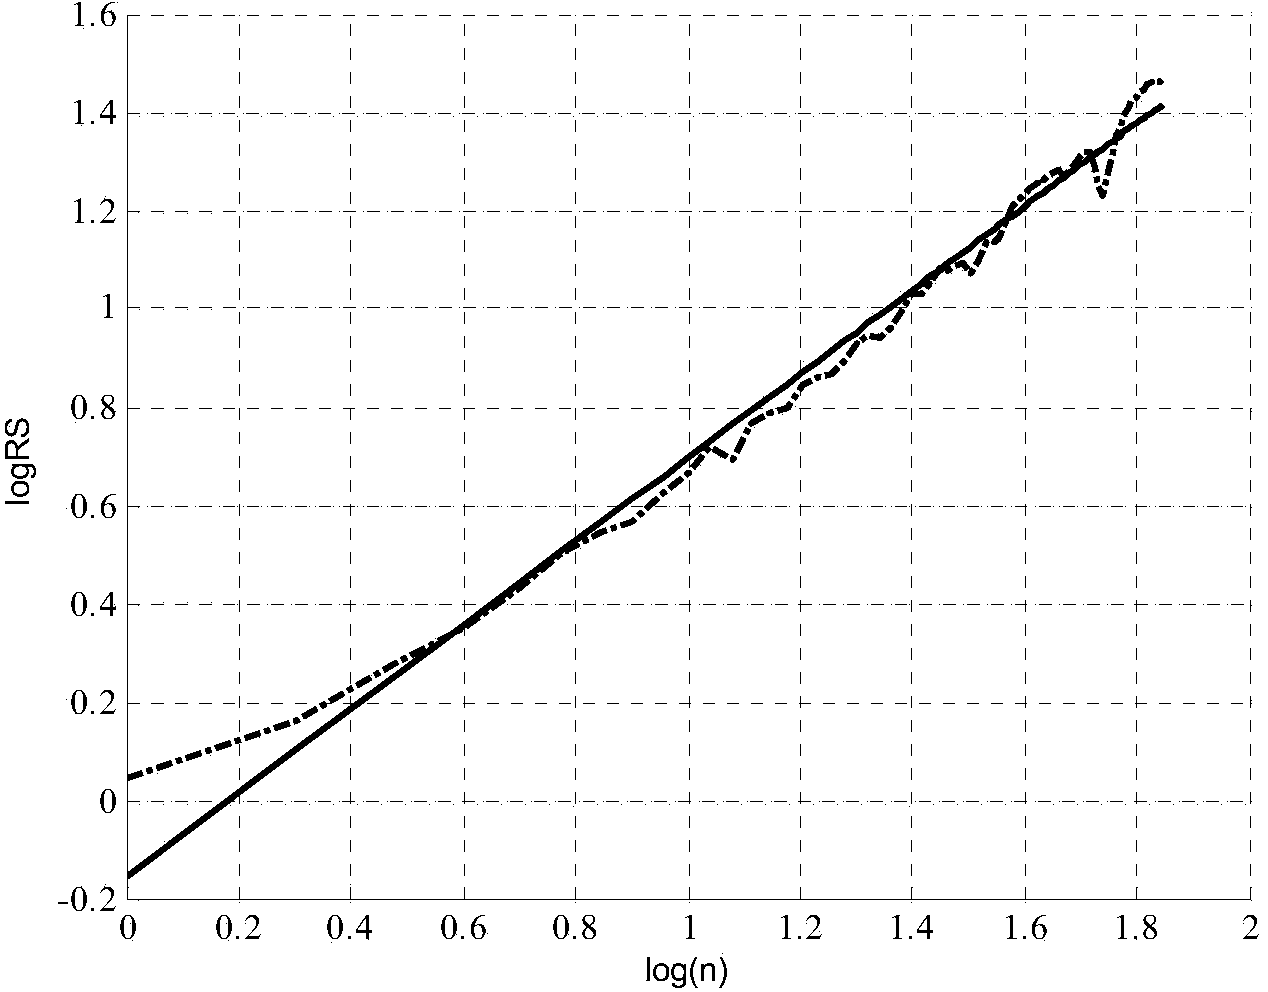 Short-time power load forecasting method based on long-range dependence FARIMA model